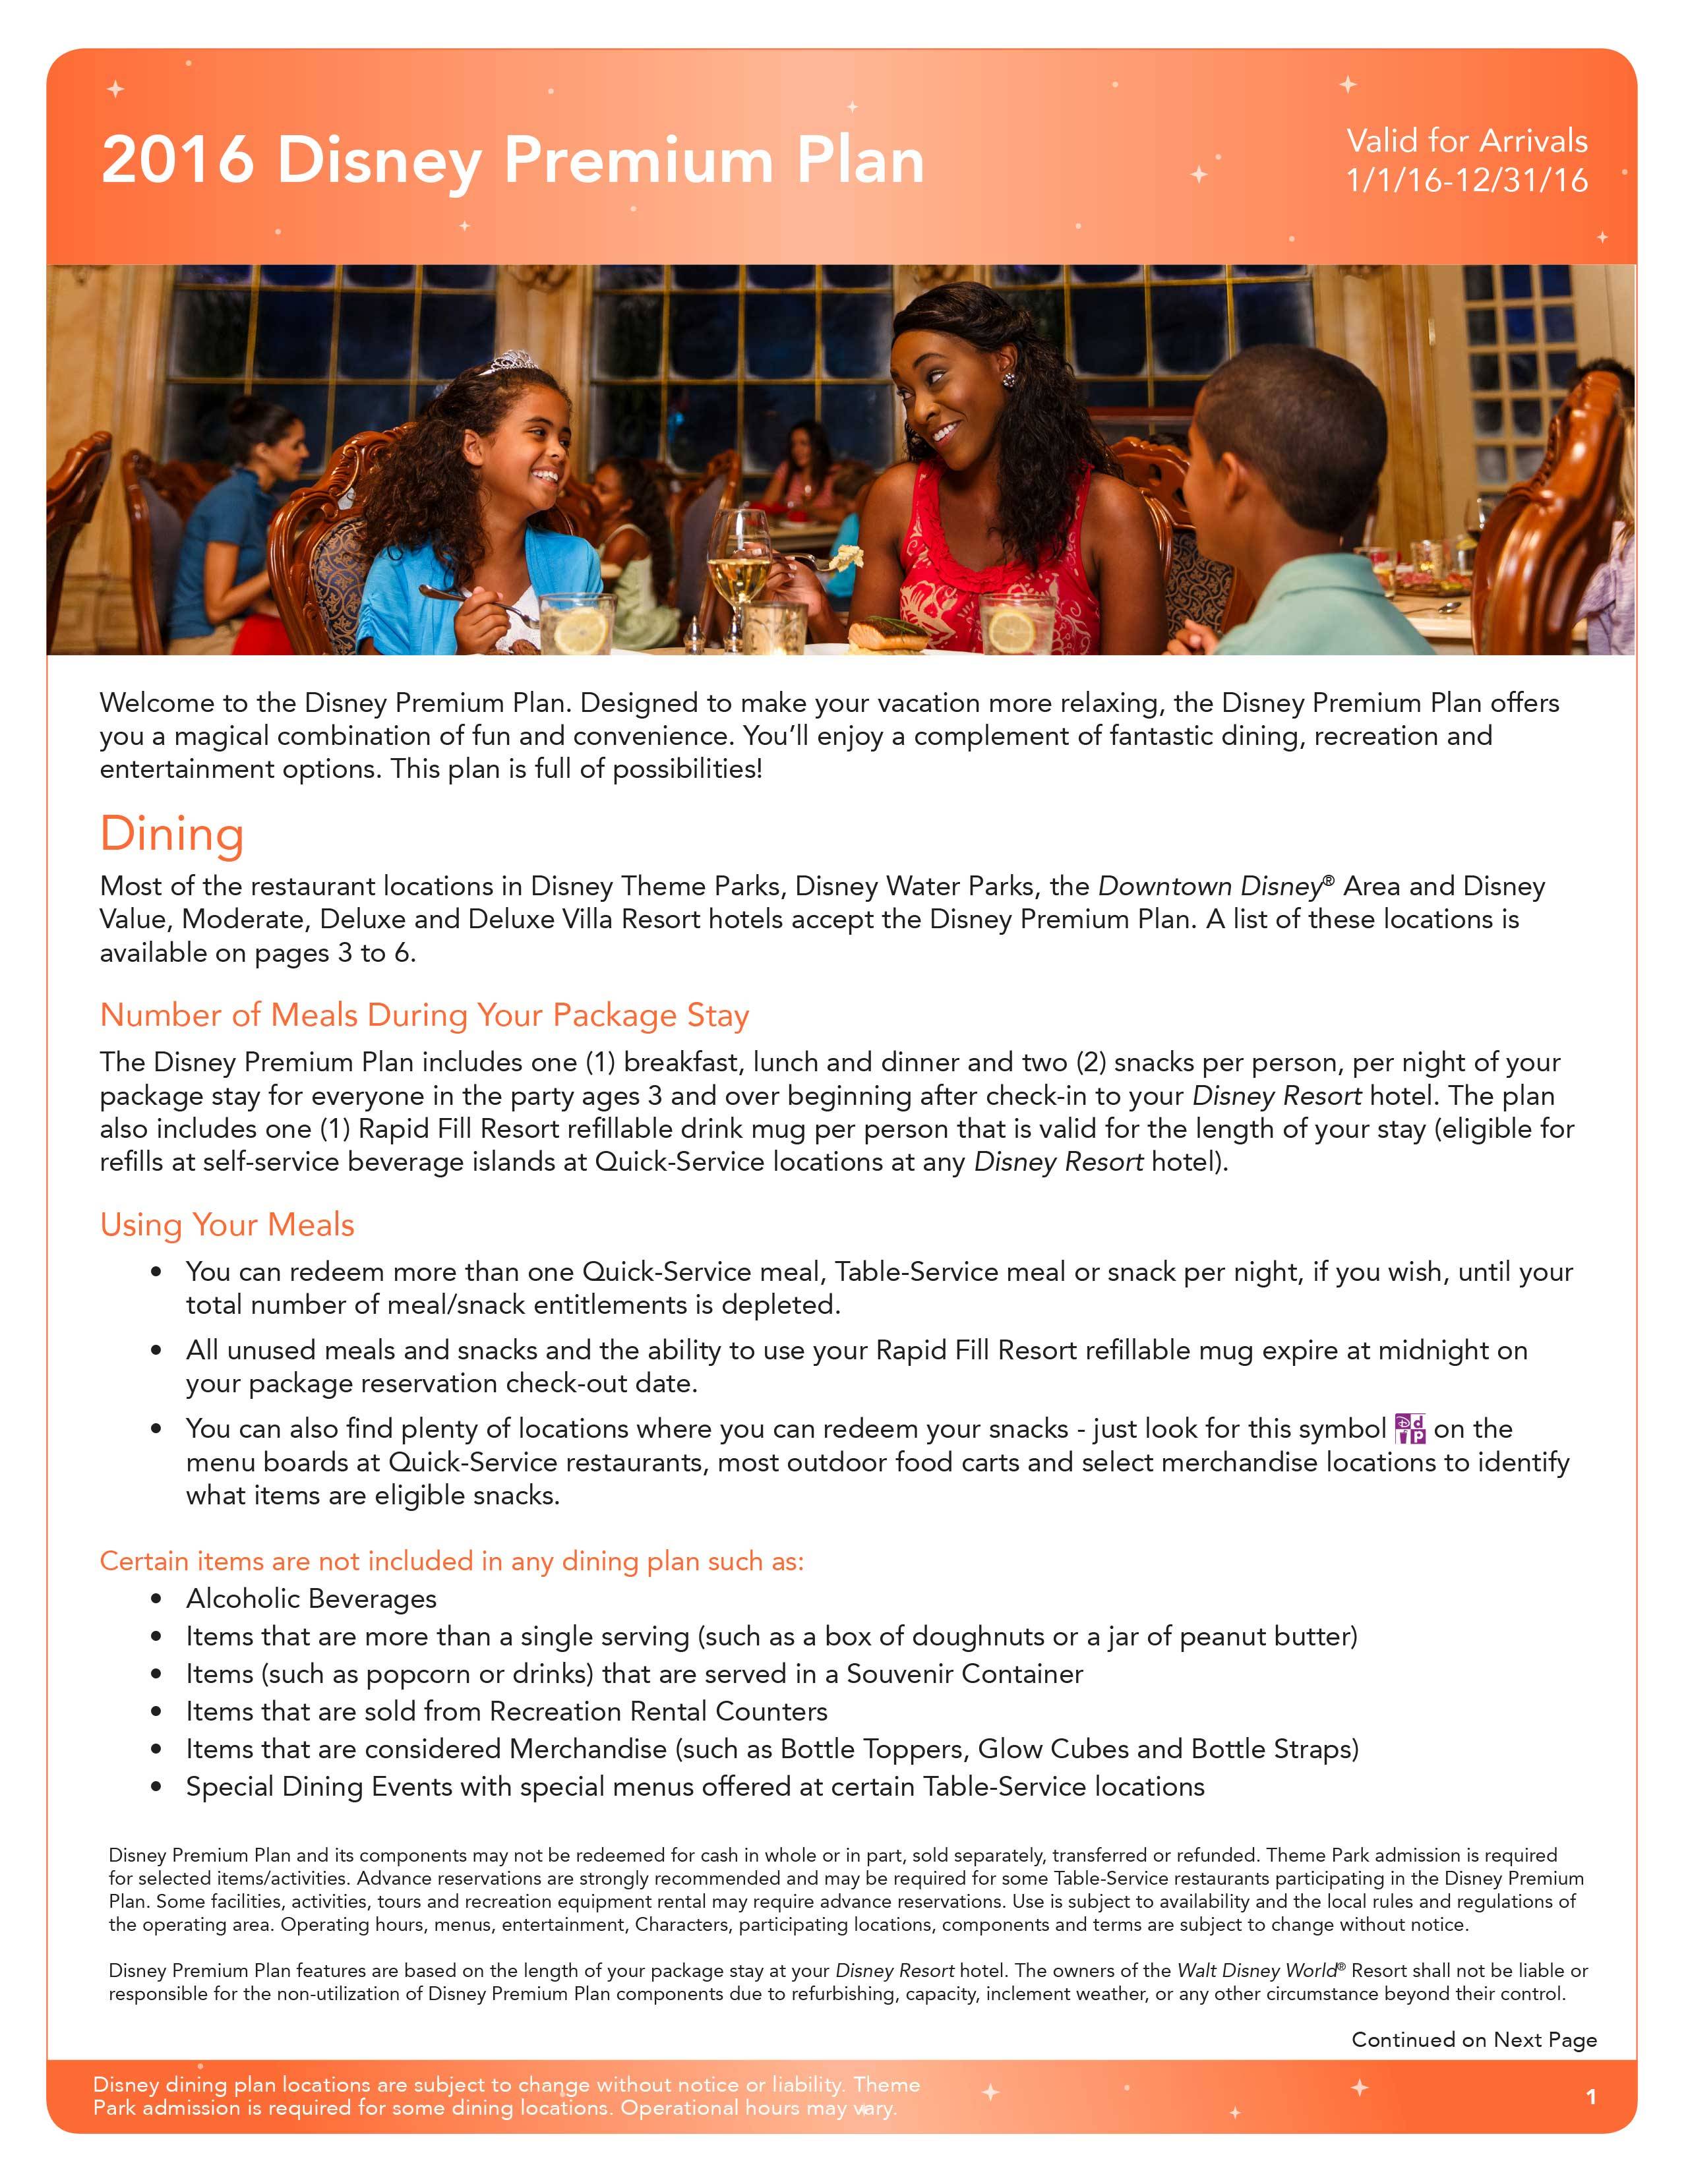 2016 Disney Premium Dining Plan brochure - Page 1